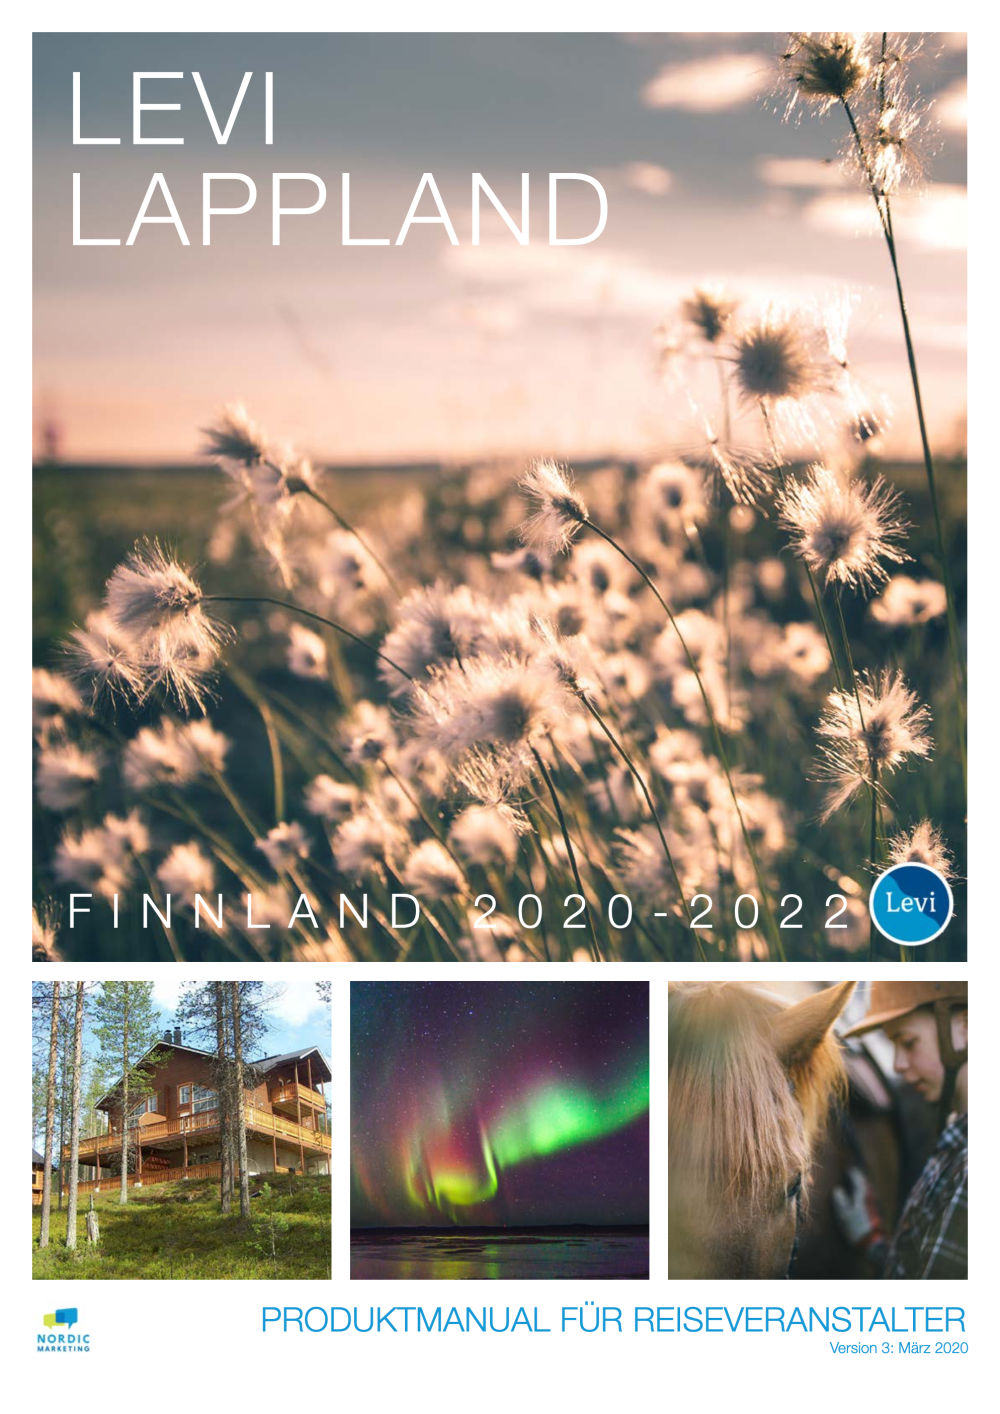 Produktmanual-Levi-Lappland-Finnland-2020-2022_Update-Cover